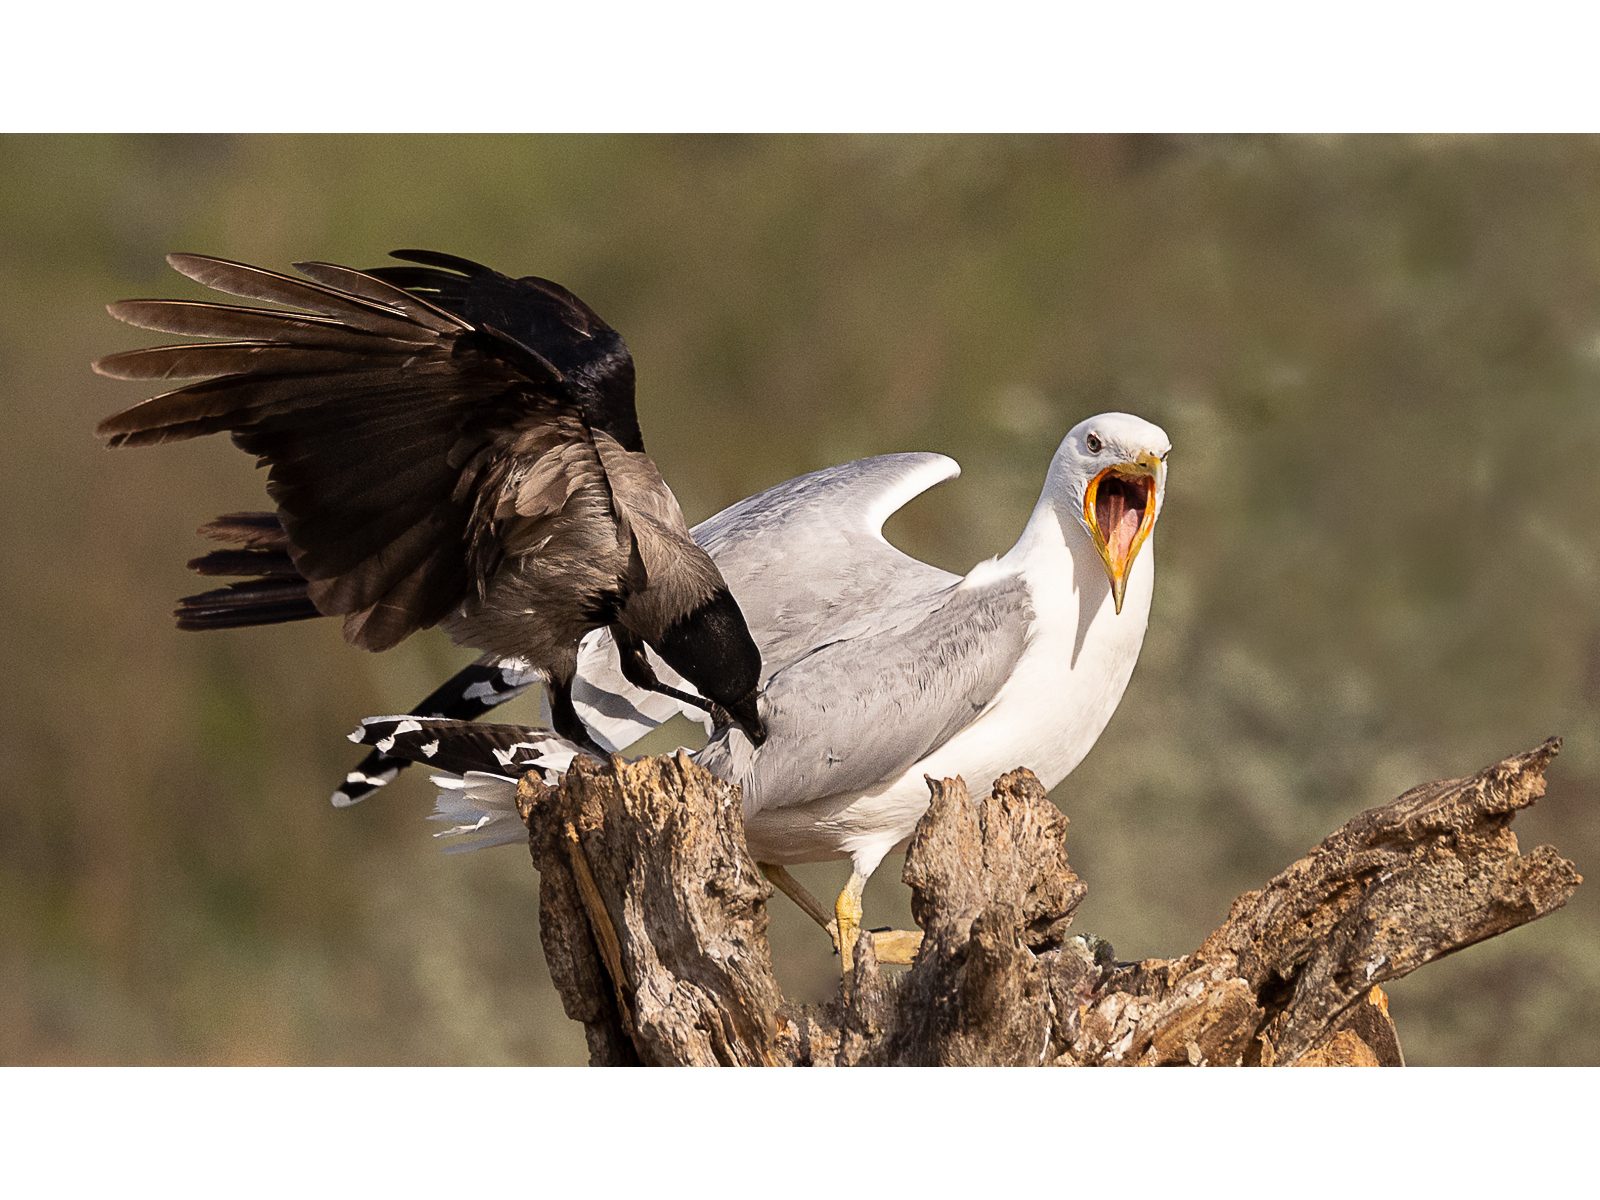 Hooded Crow attacking Gull - Barbara Baker.jpg